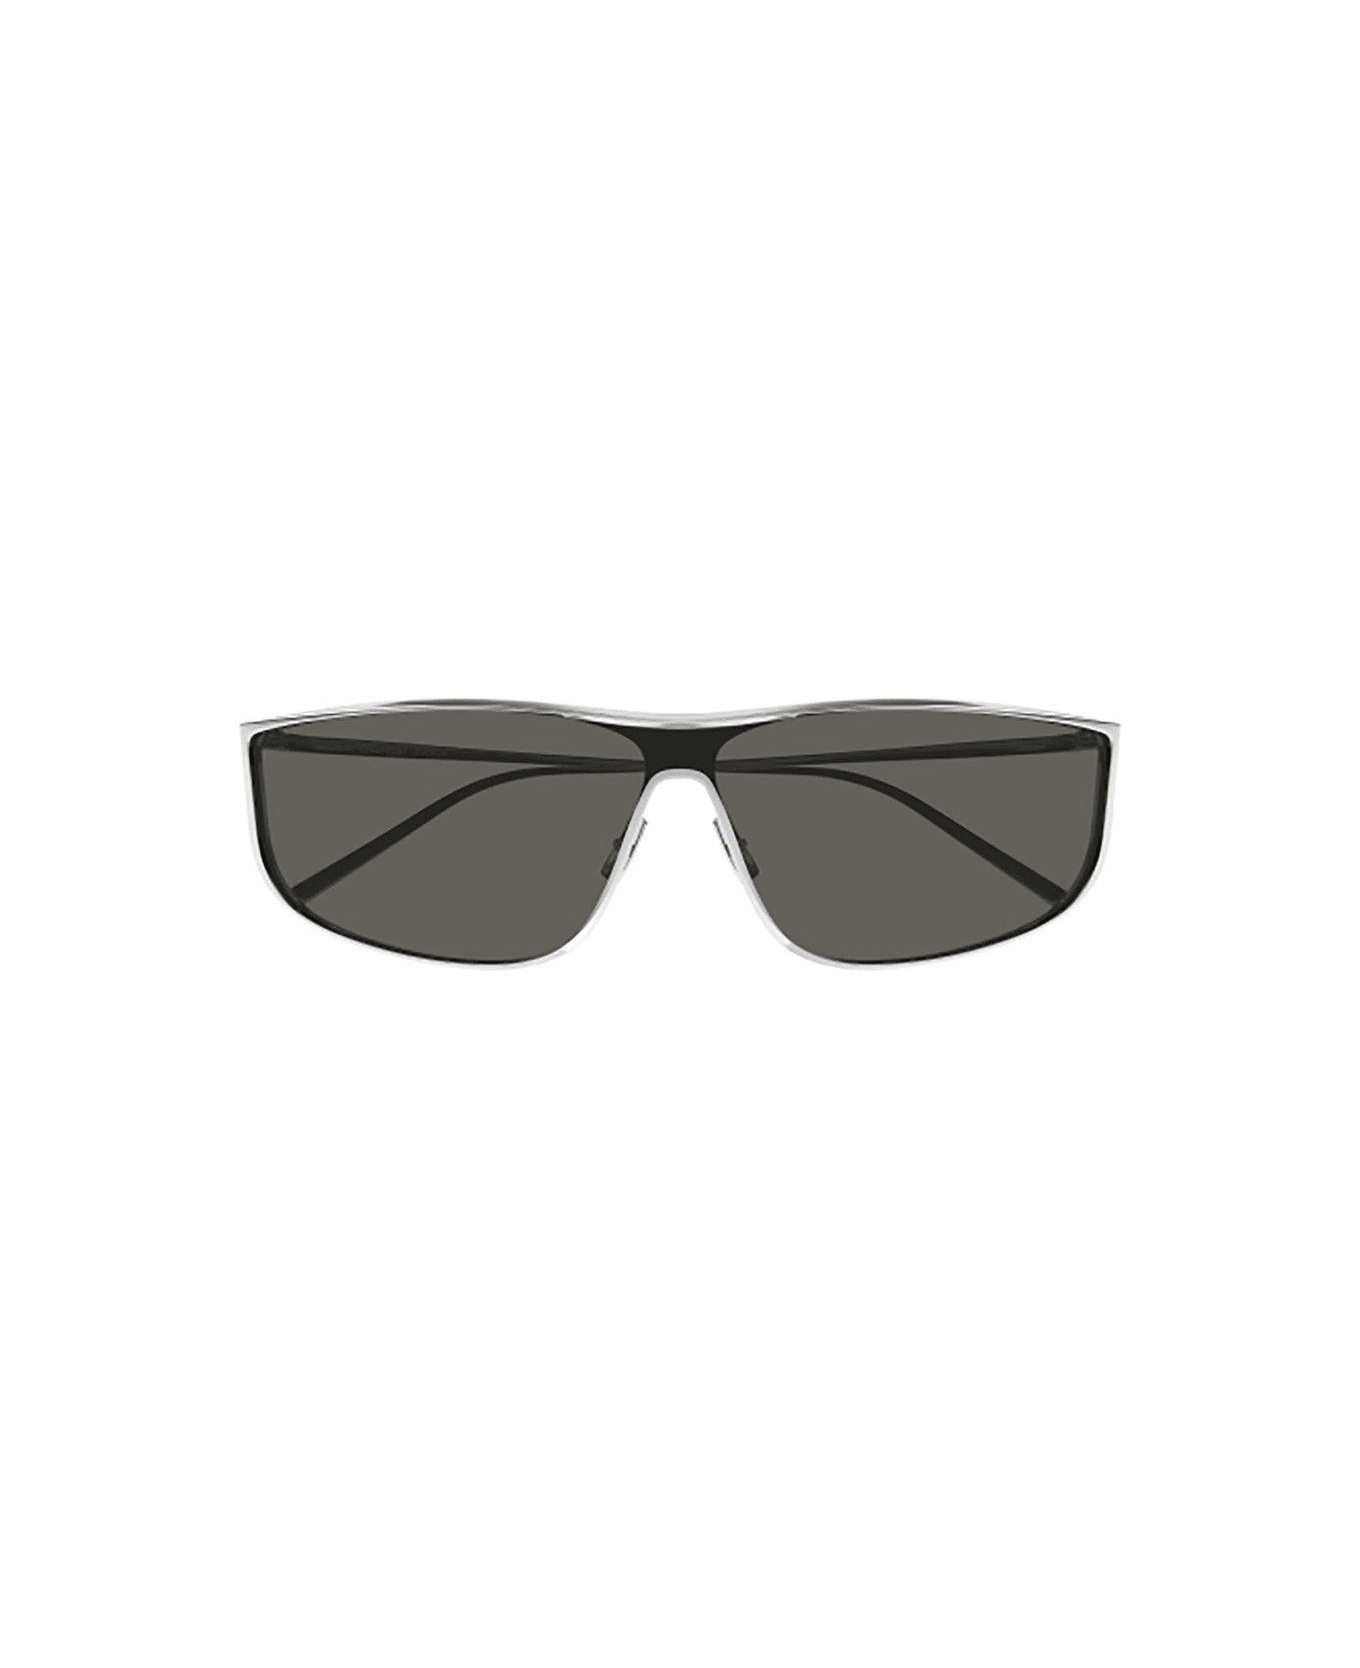 Saint Laurent Eyewear Sl 605 Luna Rectangular Frame Sunglasses - 001 silver silver grey